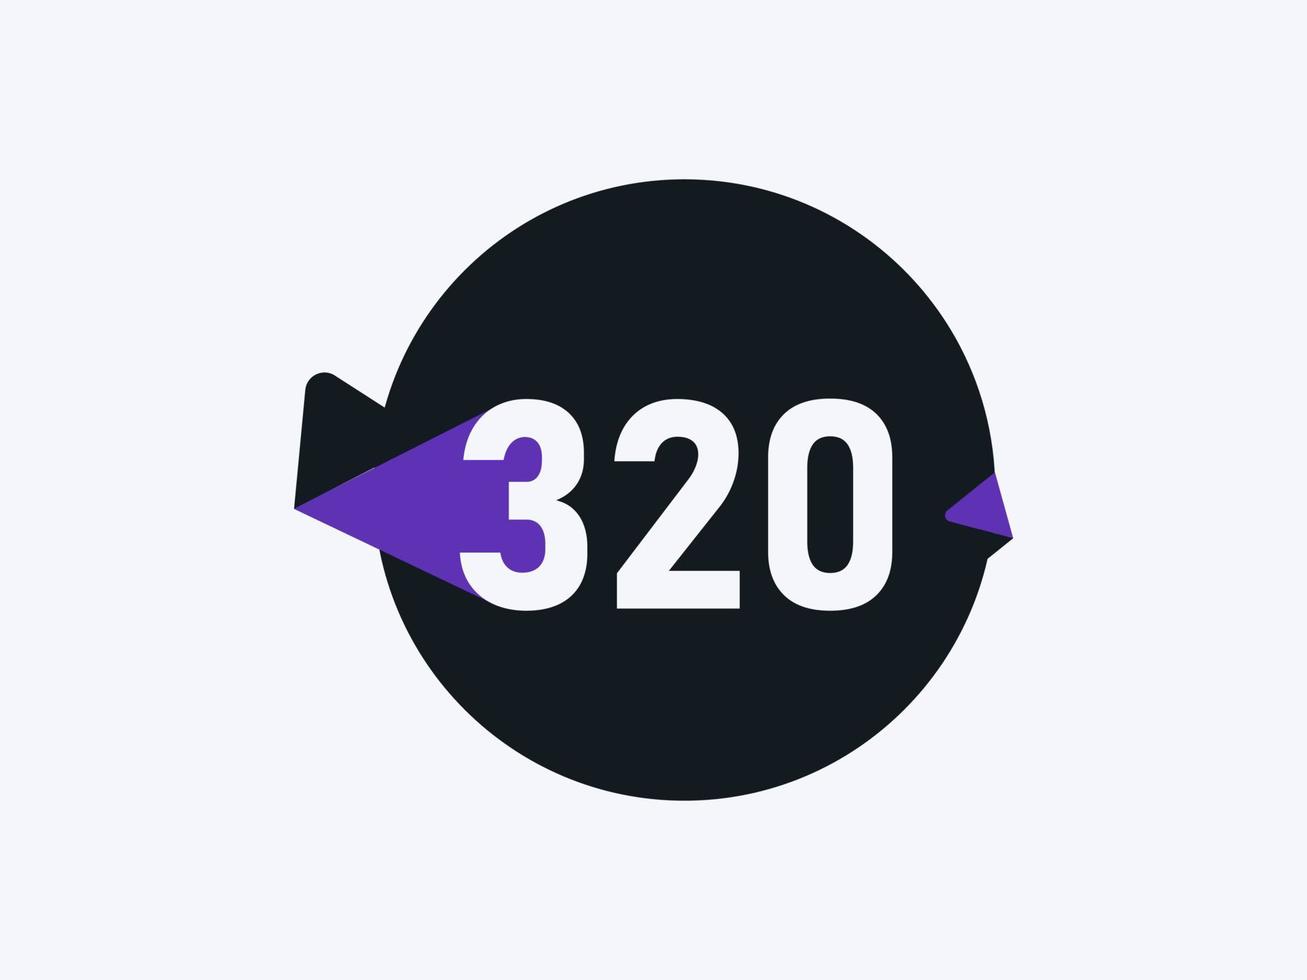 320 Number logo icon design vector image. Number logo icon design vector image